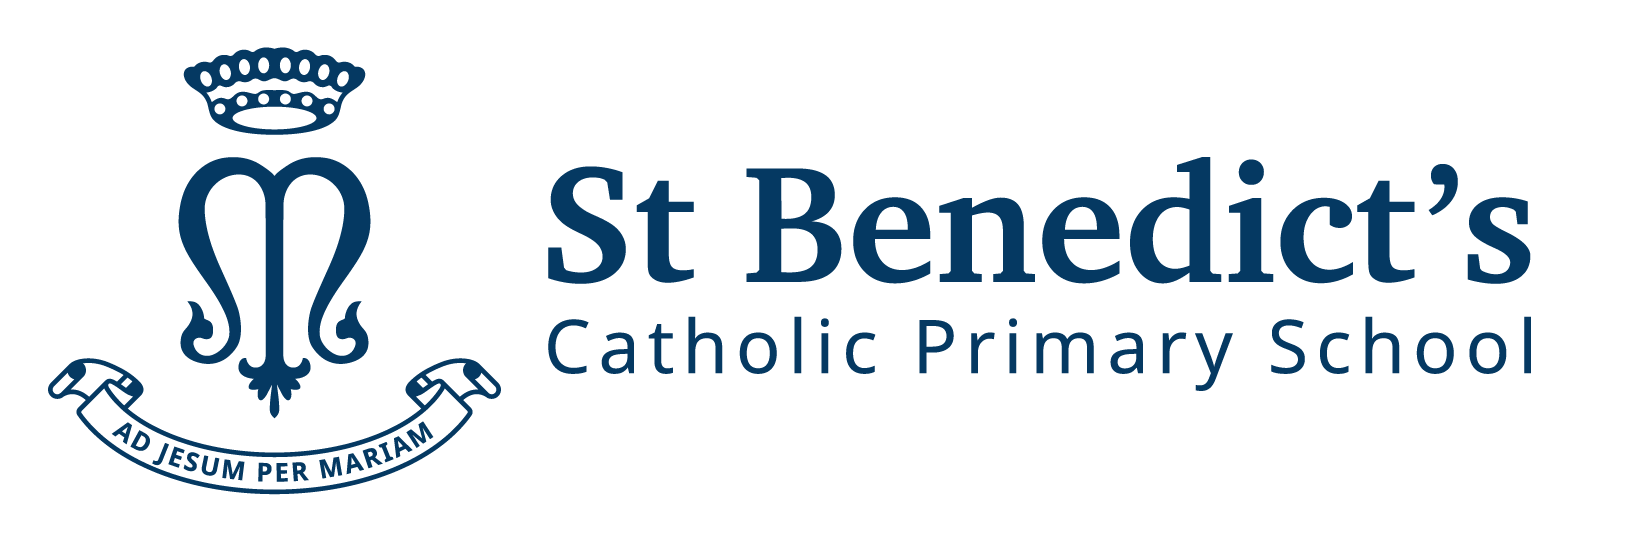 St Benedict’s Primary School, Burwood